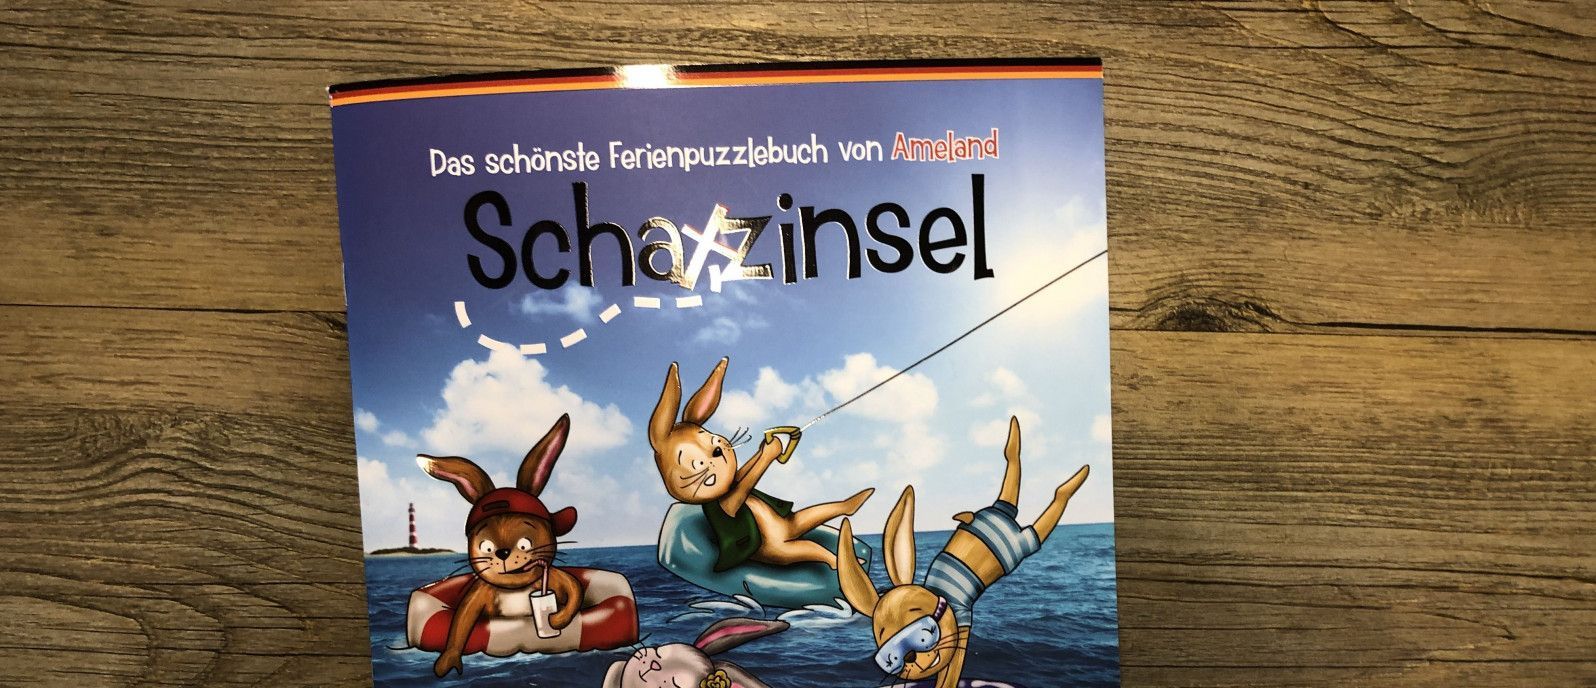 Ferienpuzzlebuch 'Schatzinsel' - webshop VVV Ameland